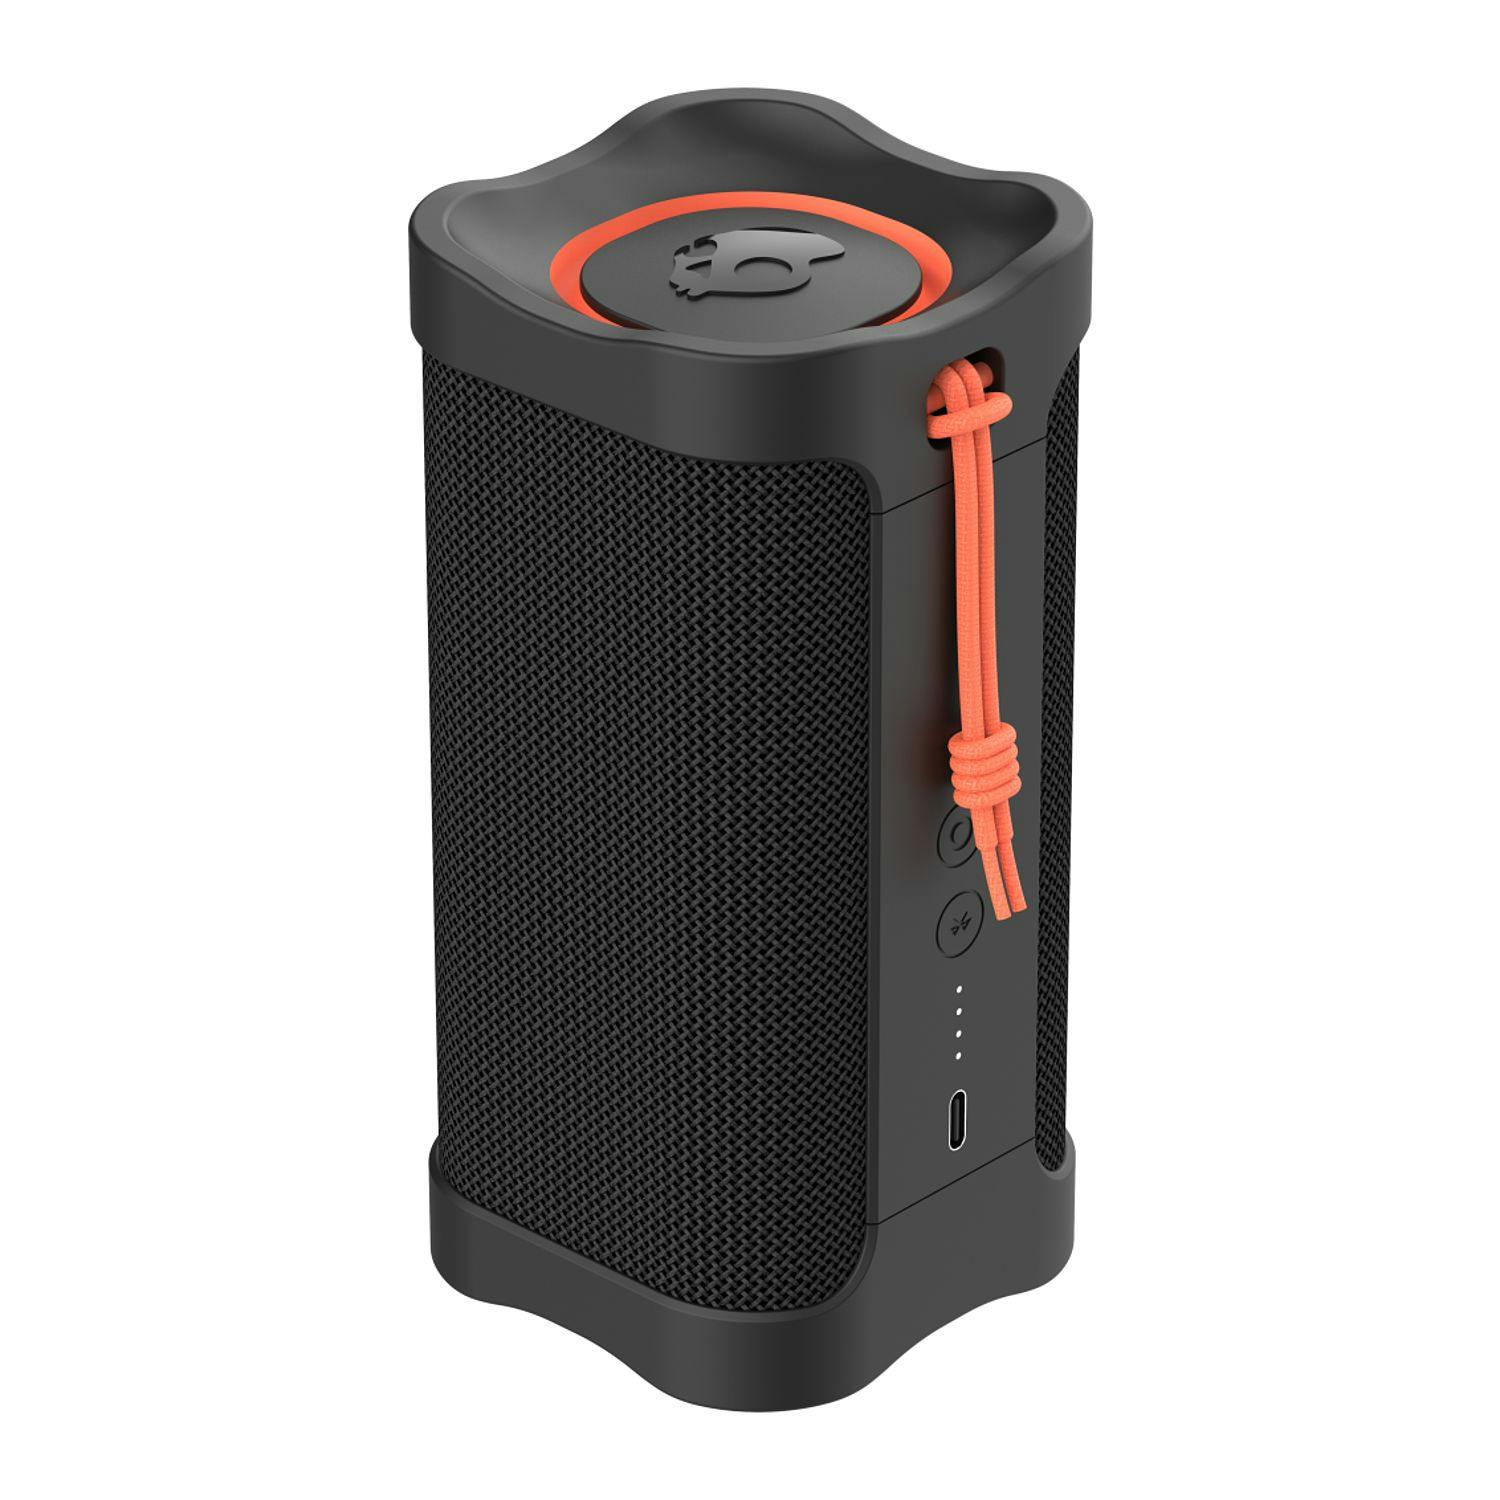 Skullcandy Terrain Bluetooth Speaker - additional Image 2